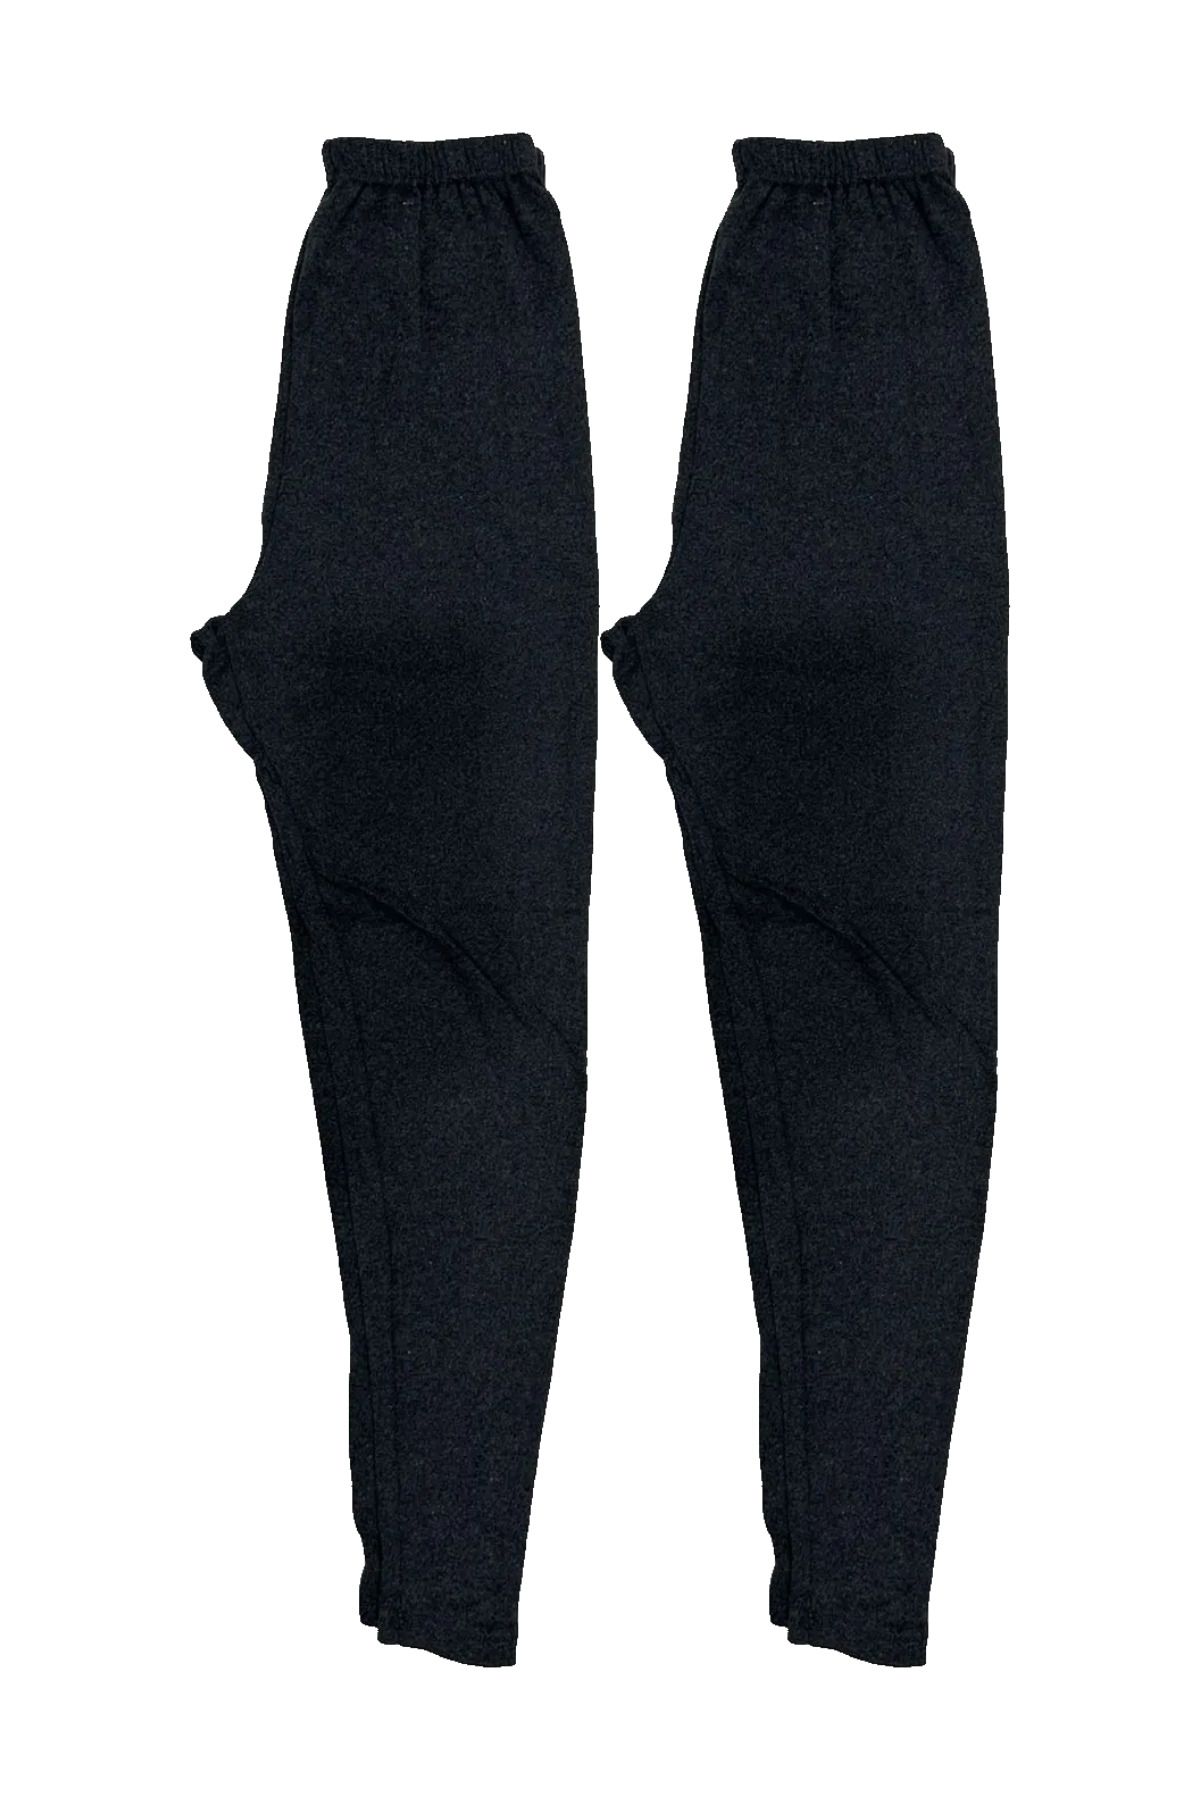 comstar 2'li Siyah Rahat Yumuşak İçlik Tayt, Pantolon Altı İçlik, İçlik Pijama, Kışlık İçlik Giyim